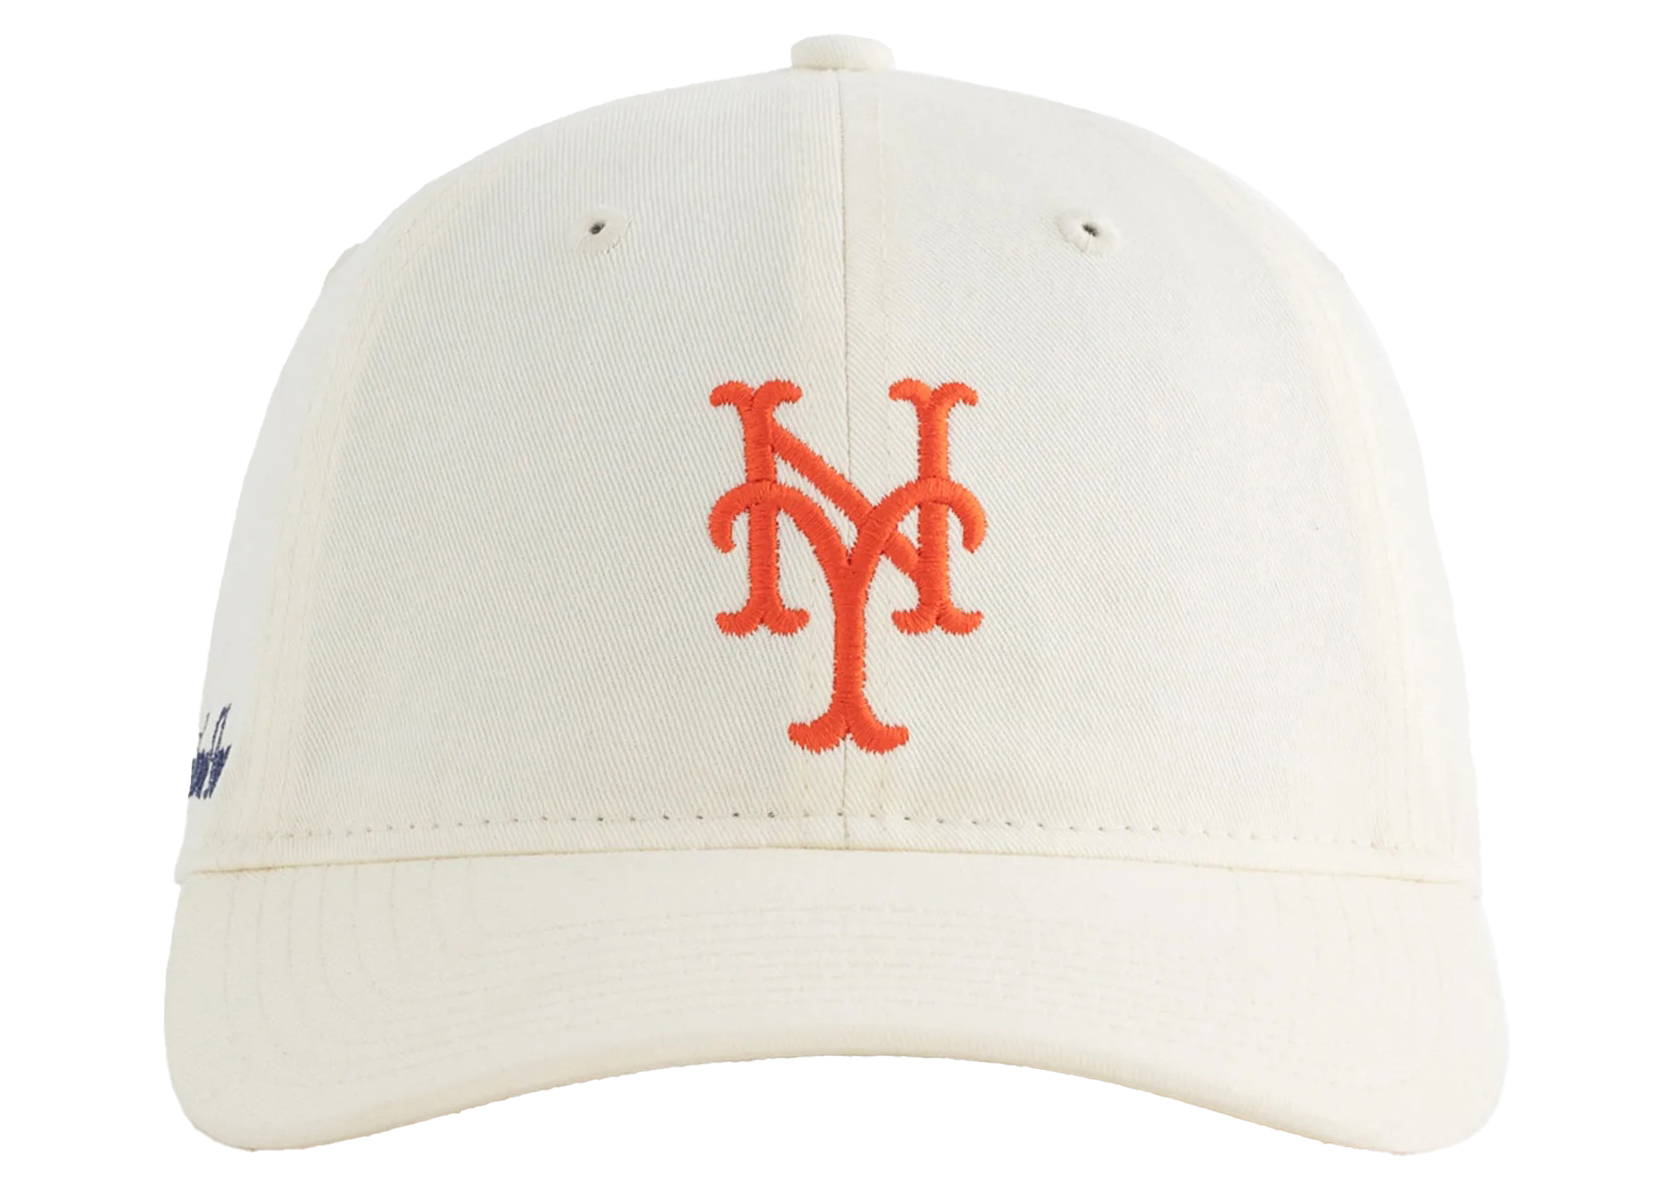 AIME LEON DORE - New Era Mets Hat